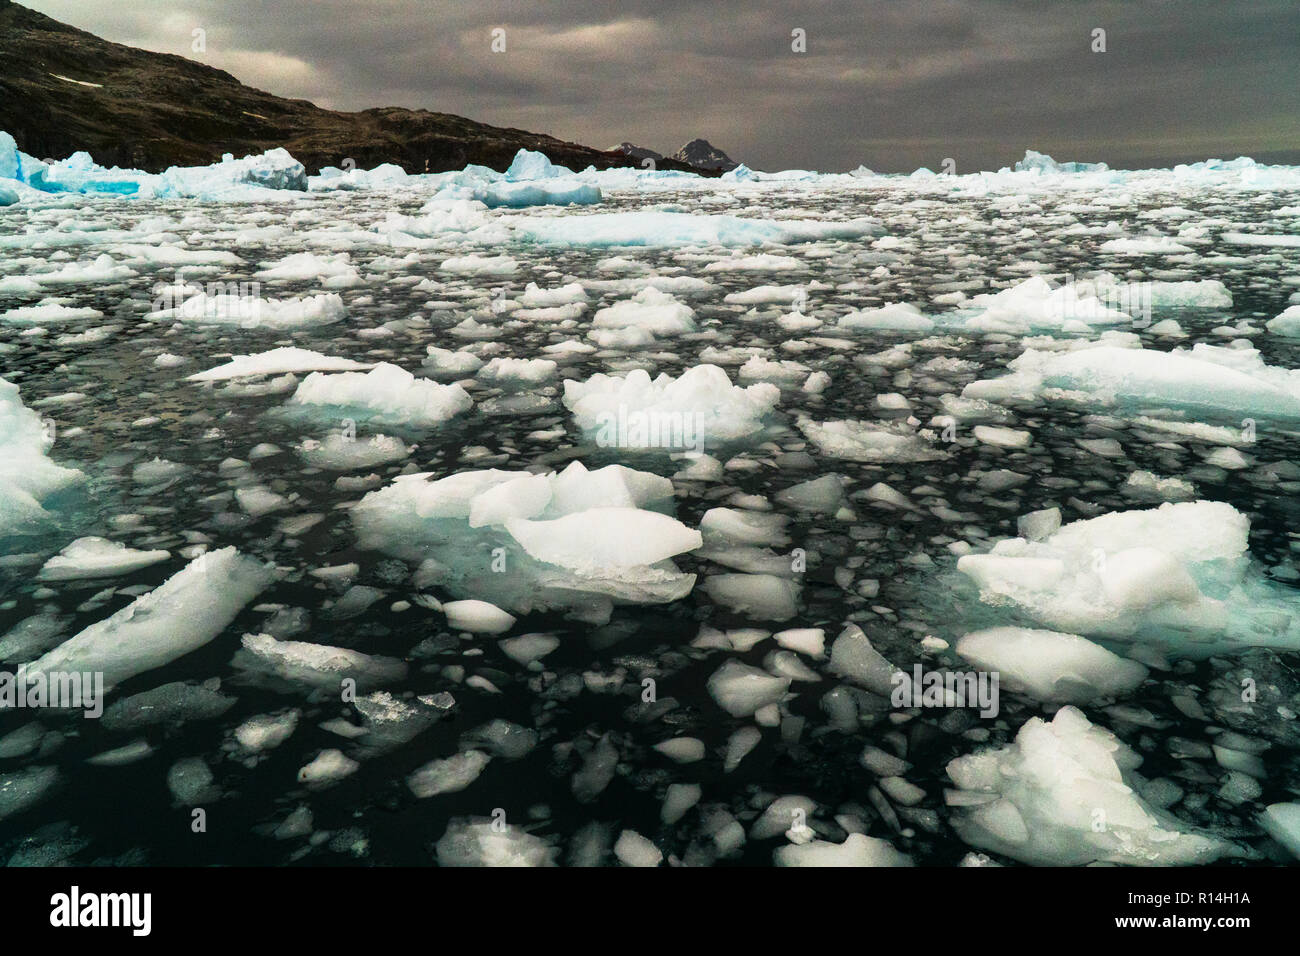 La fonte des glaciers de l'Antarctique Banque D'Images